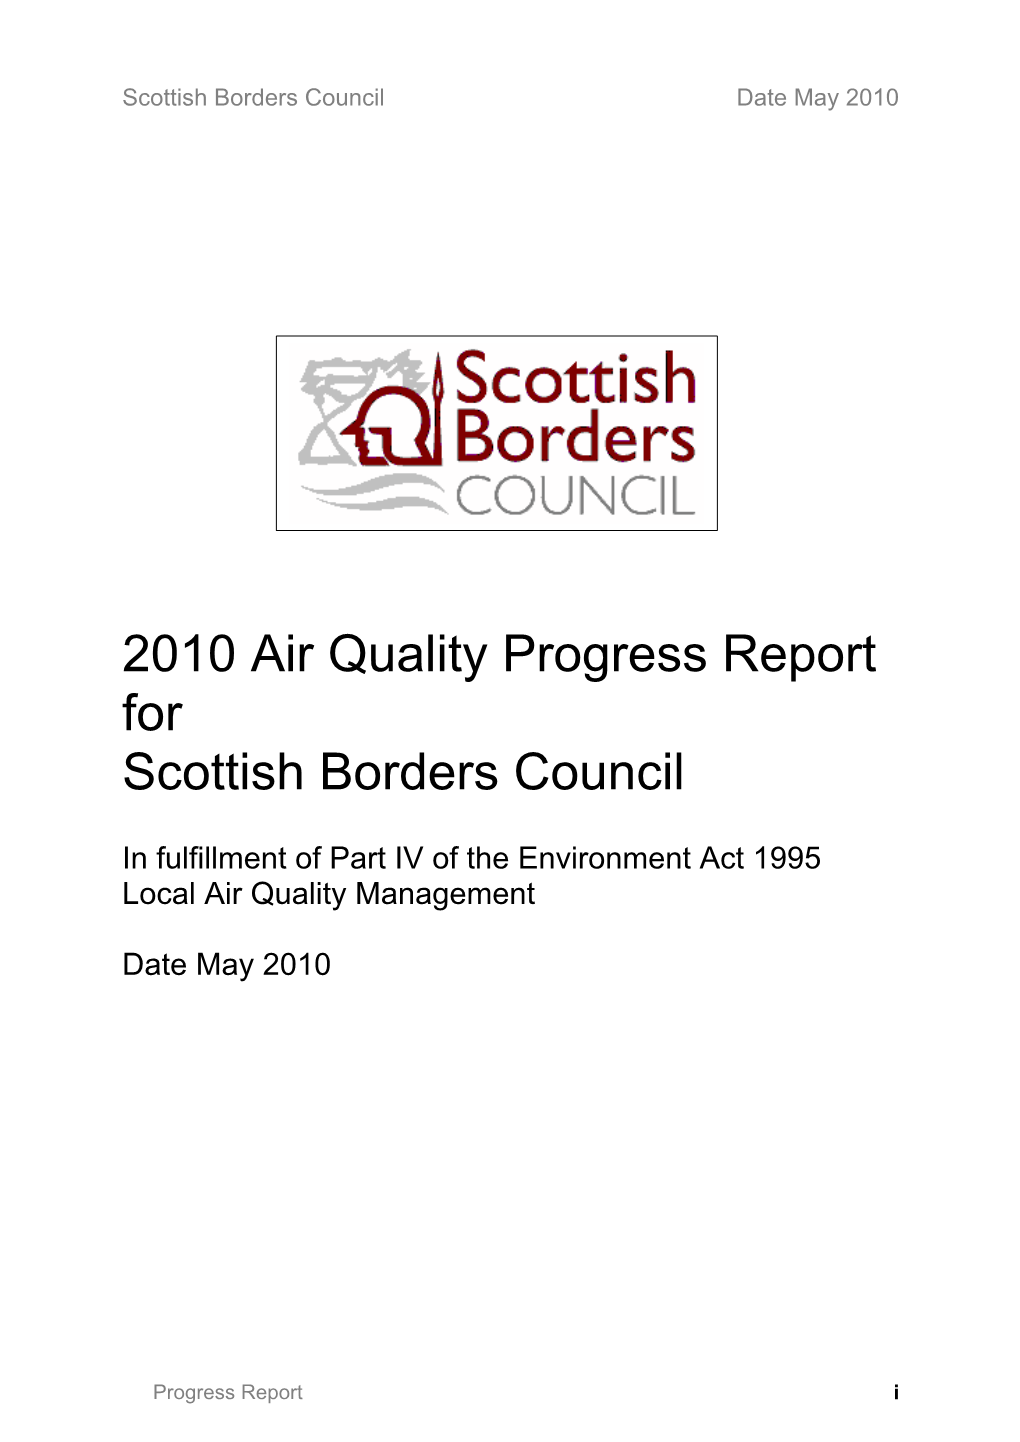 Progress Report 2010